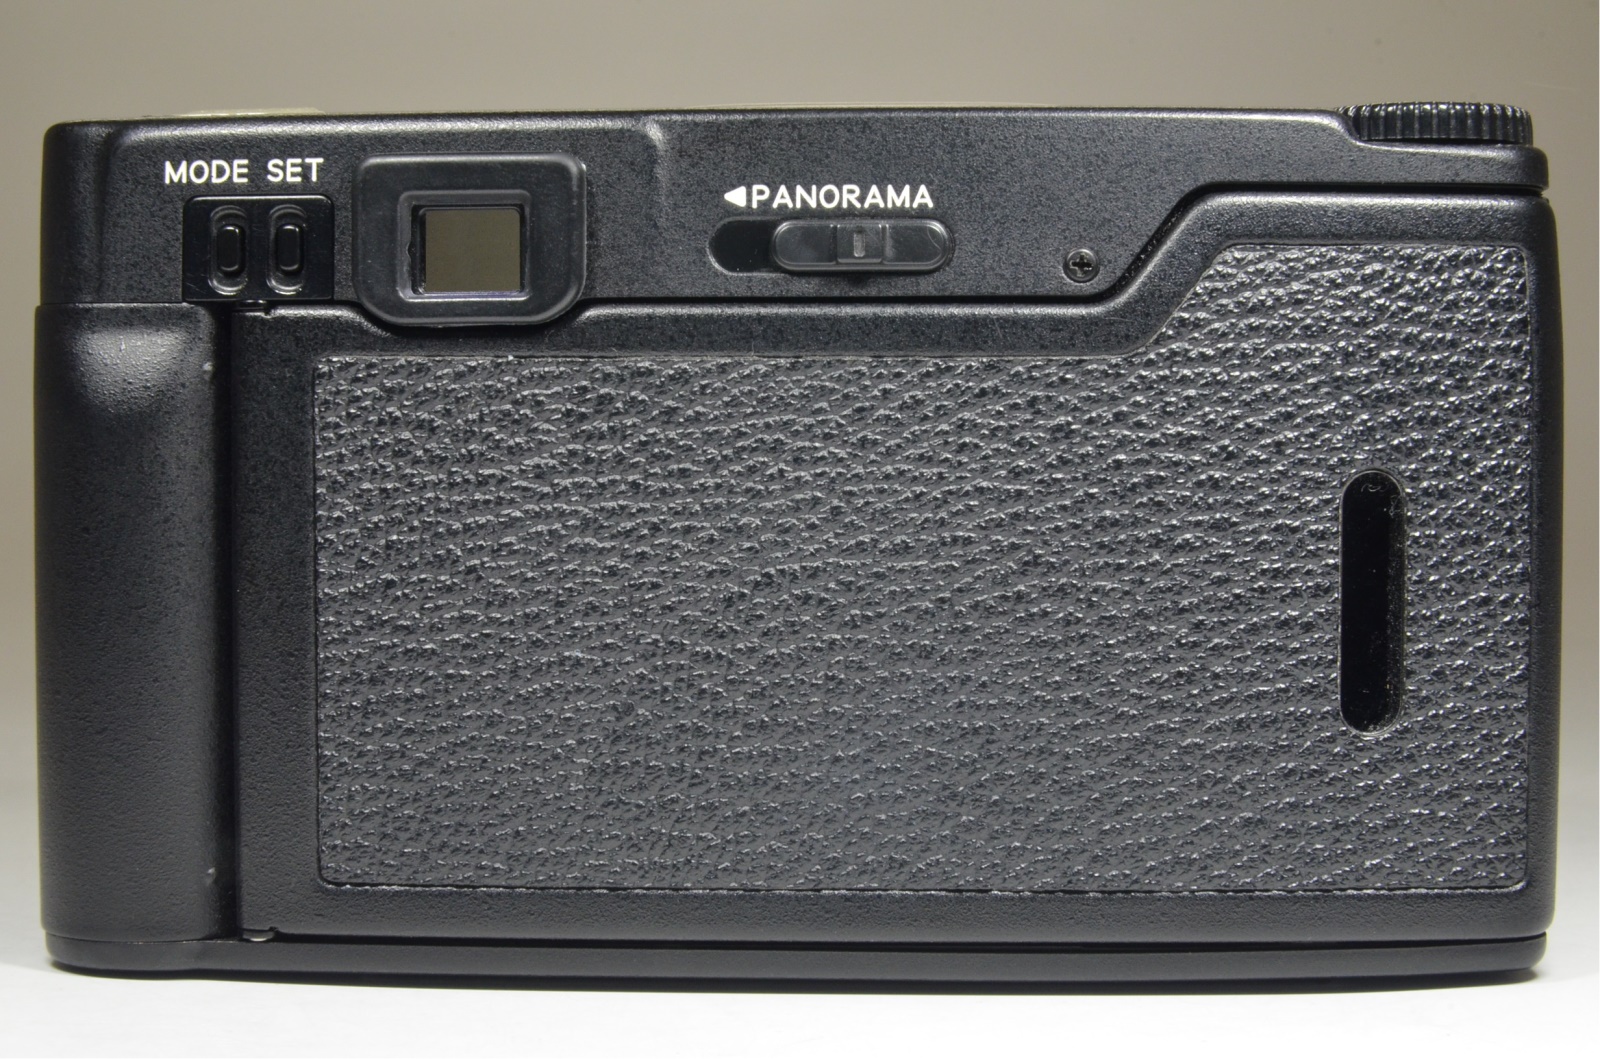 nikon 28ti p&s 35mm film camera lens 28mm f2.8 film tested